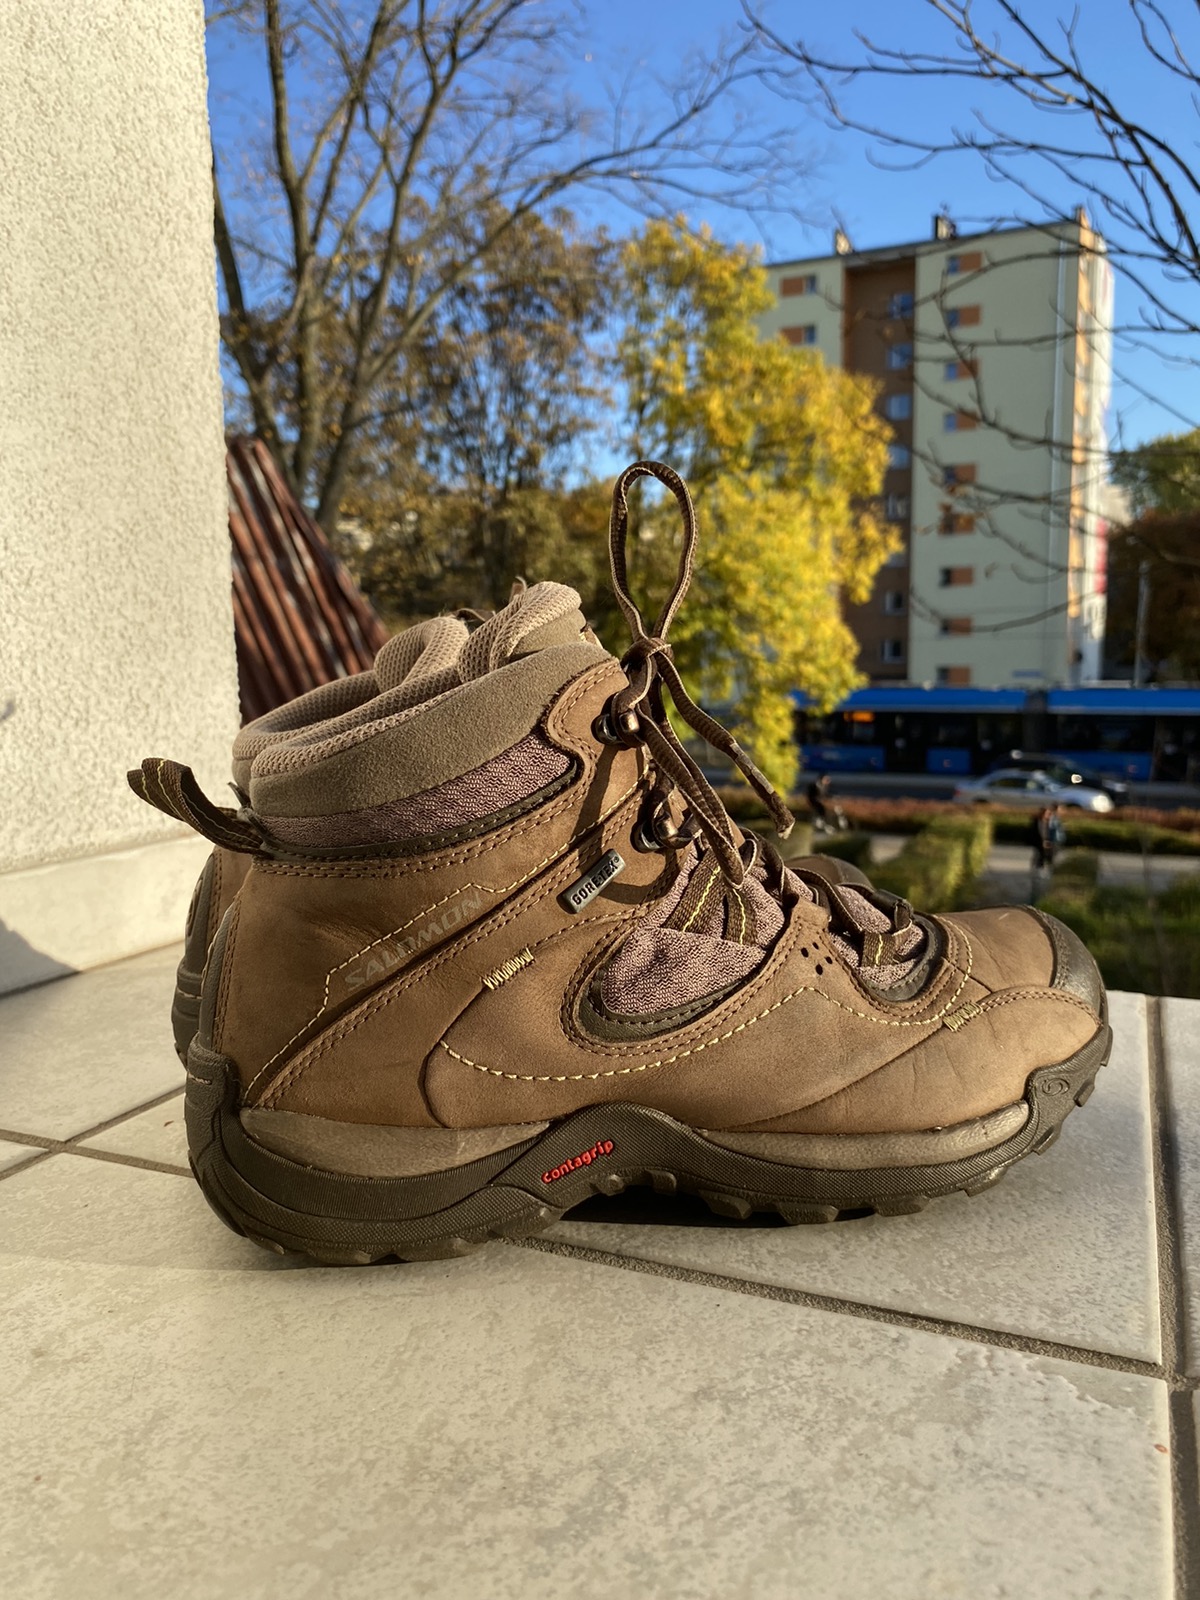 Salomon goretex high boots - 2